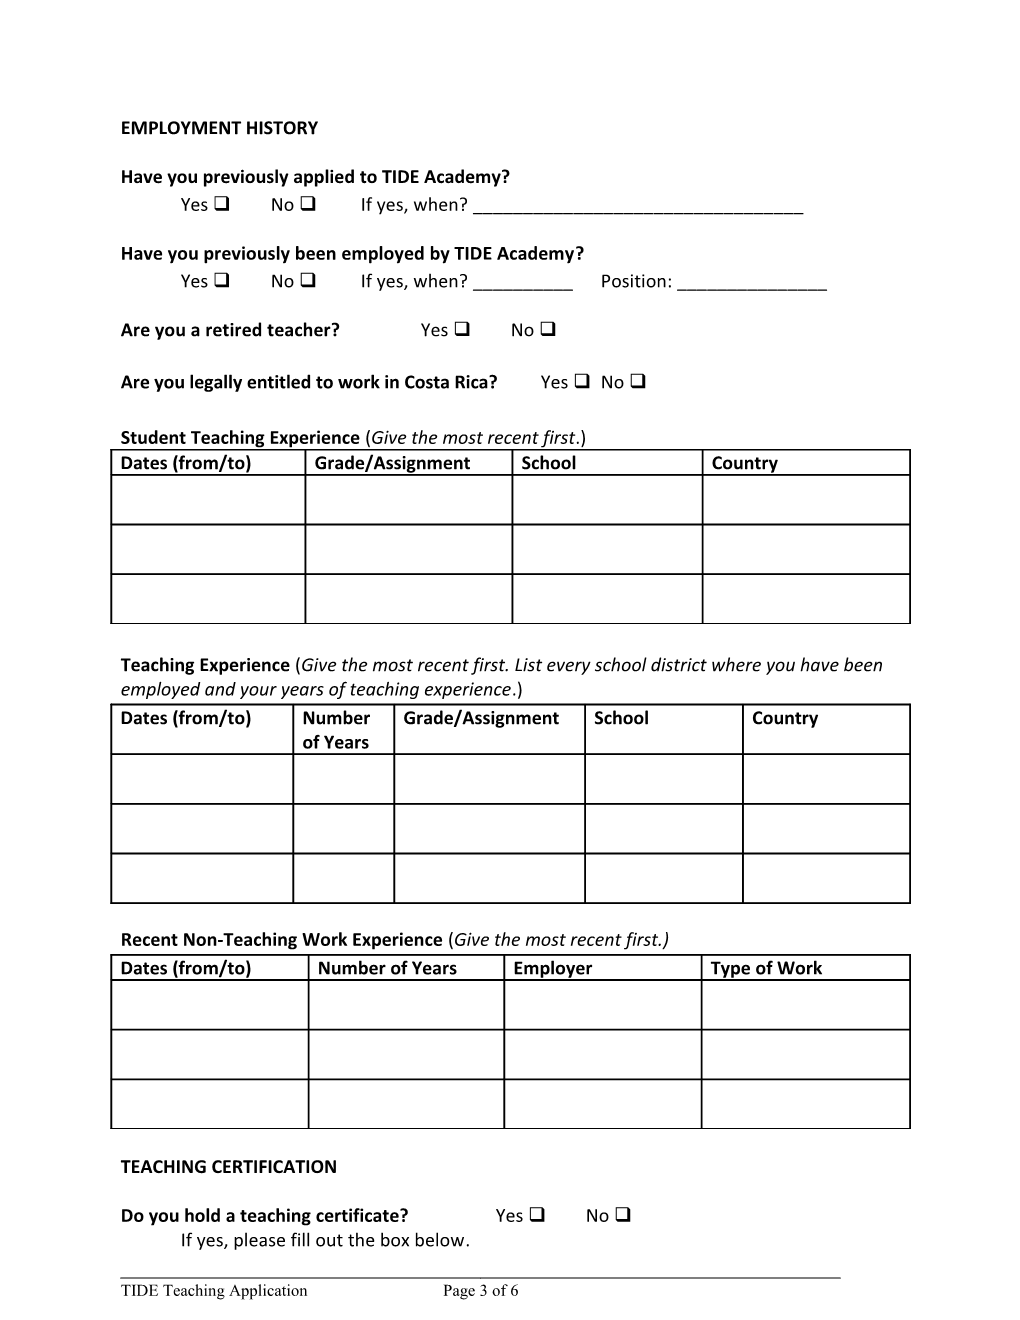 Sample Application Form For